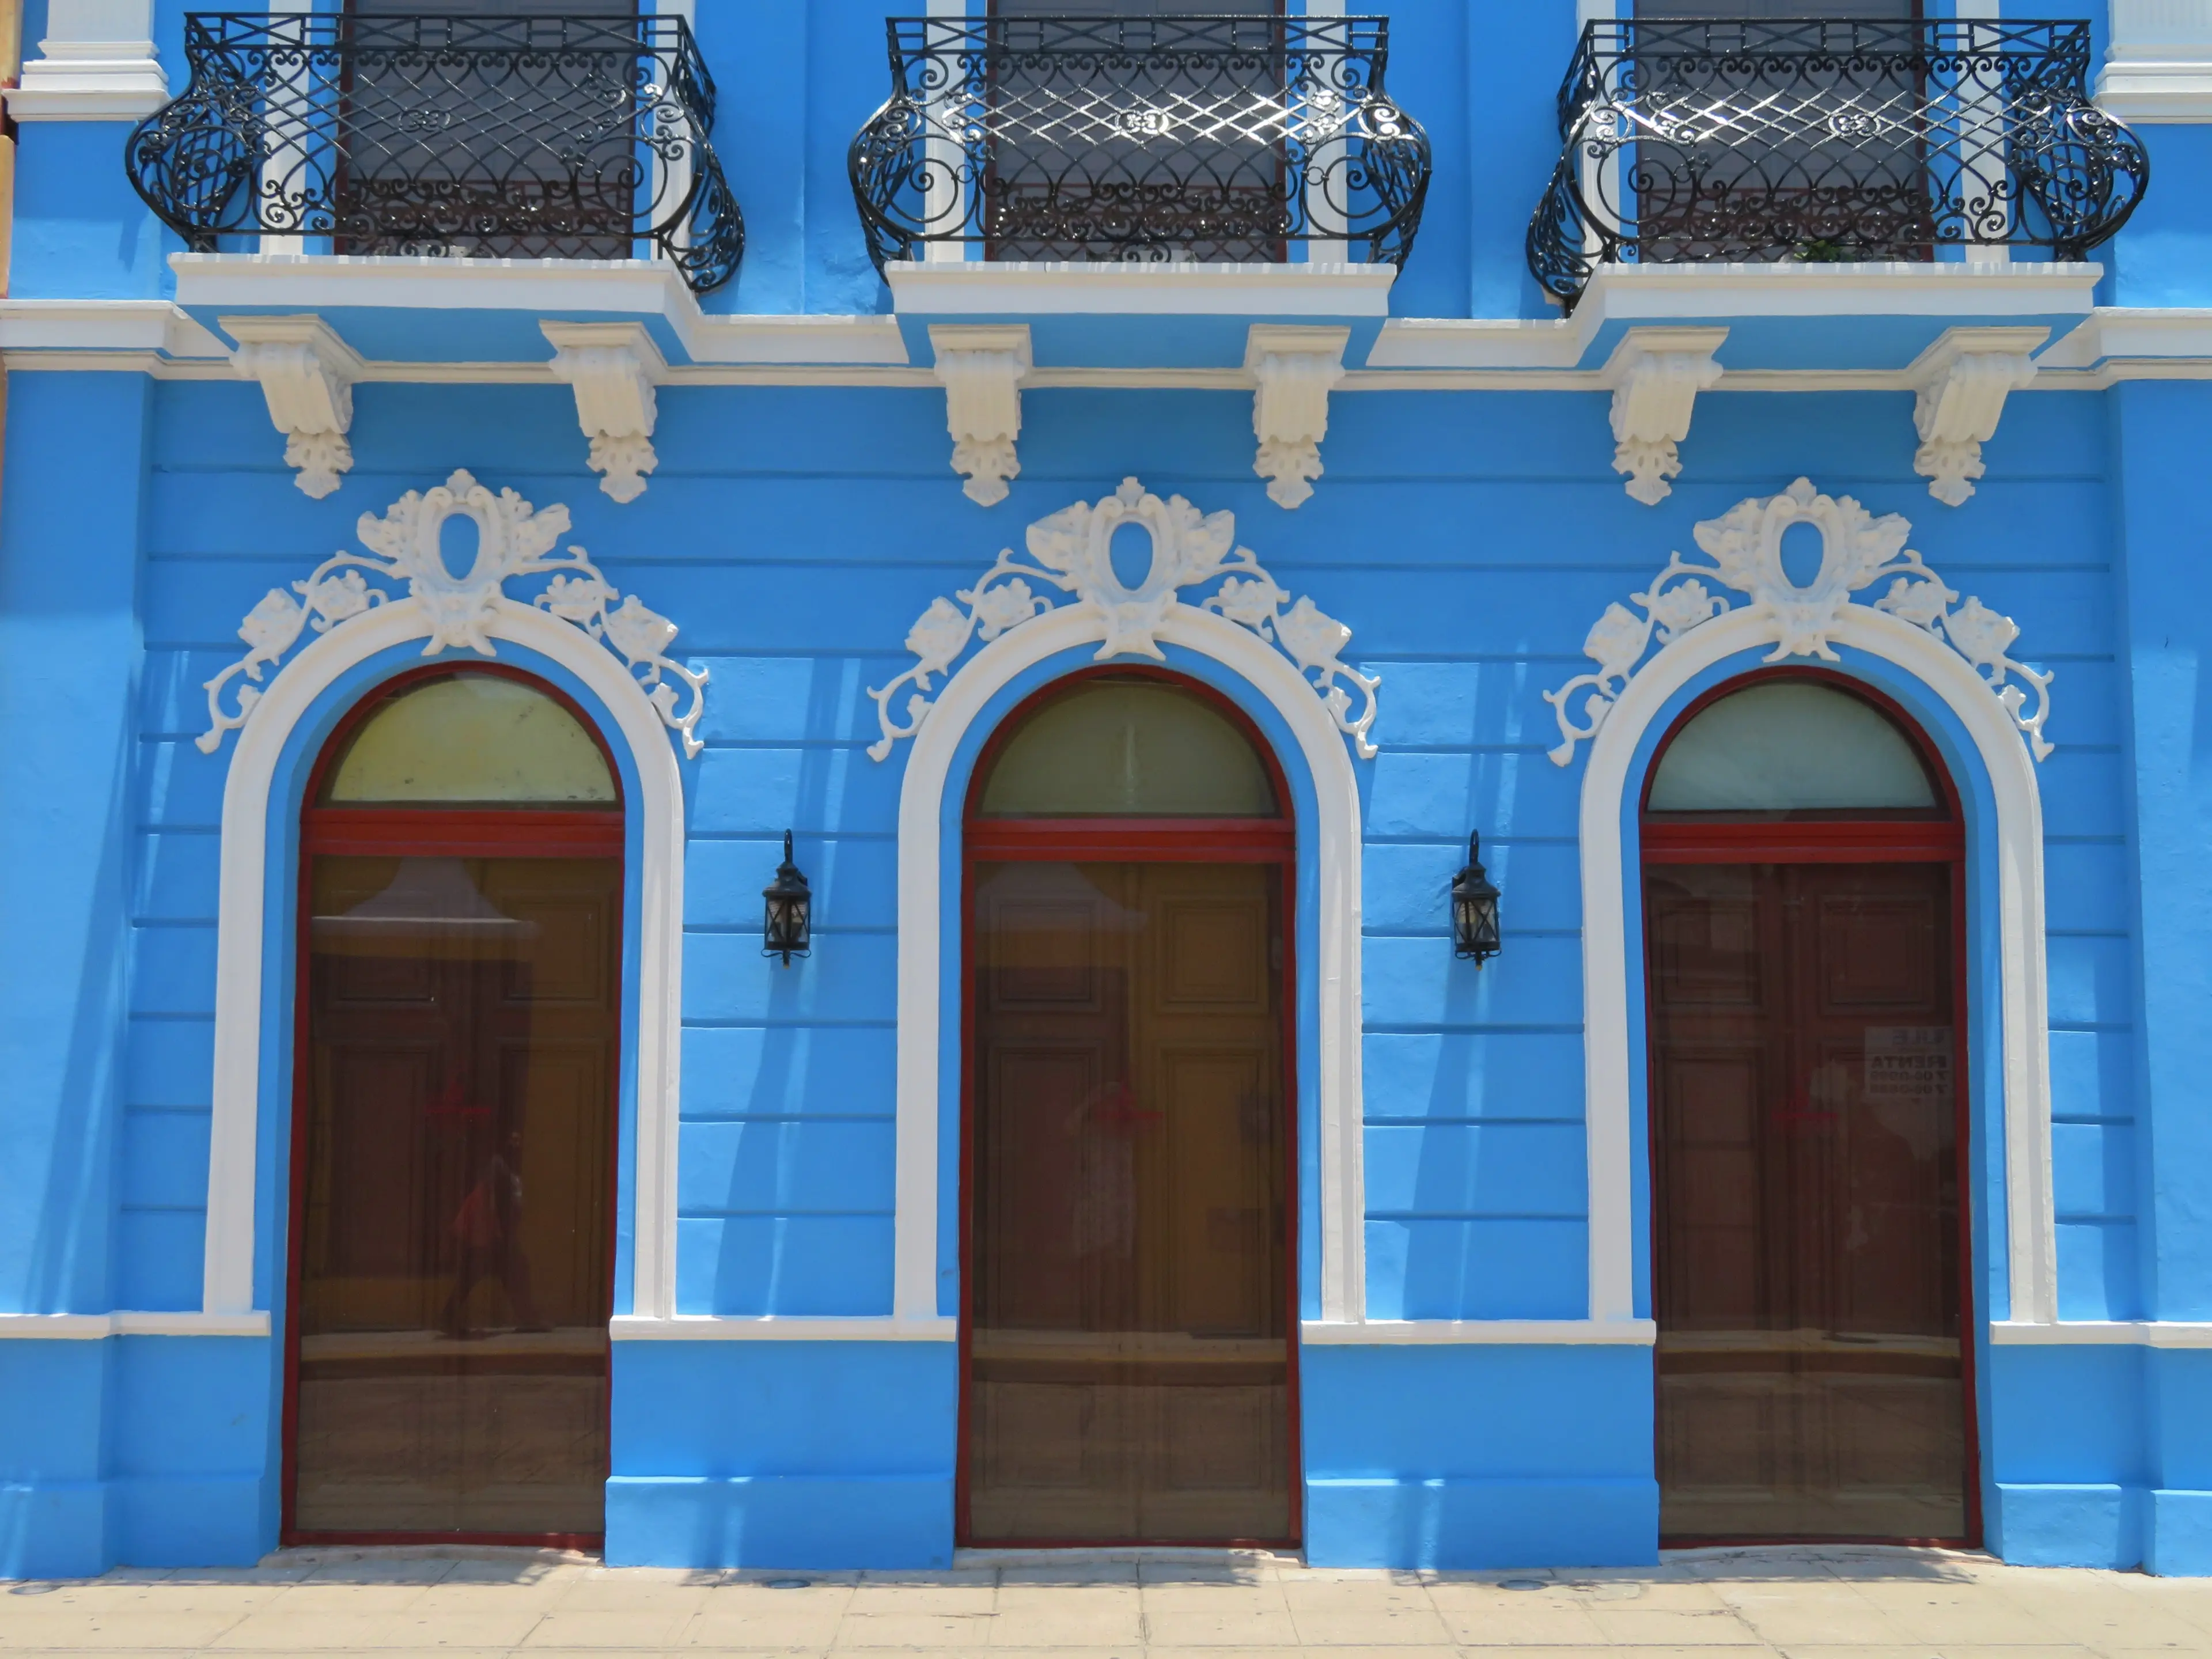 Facade of a blue colonial building